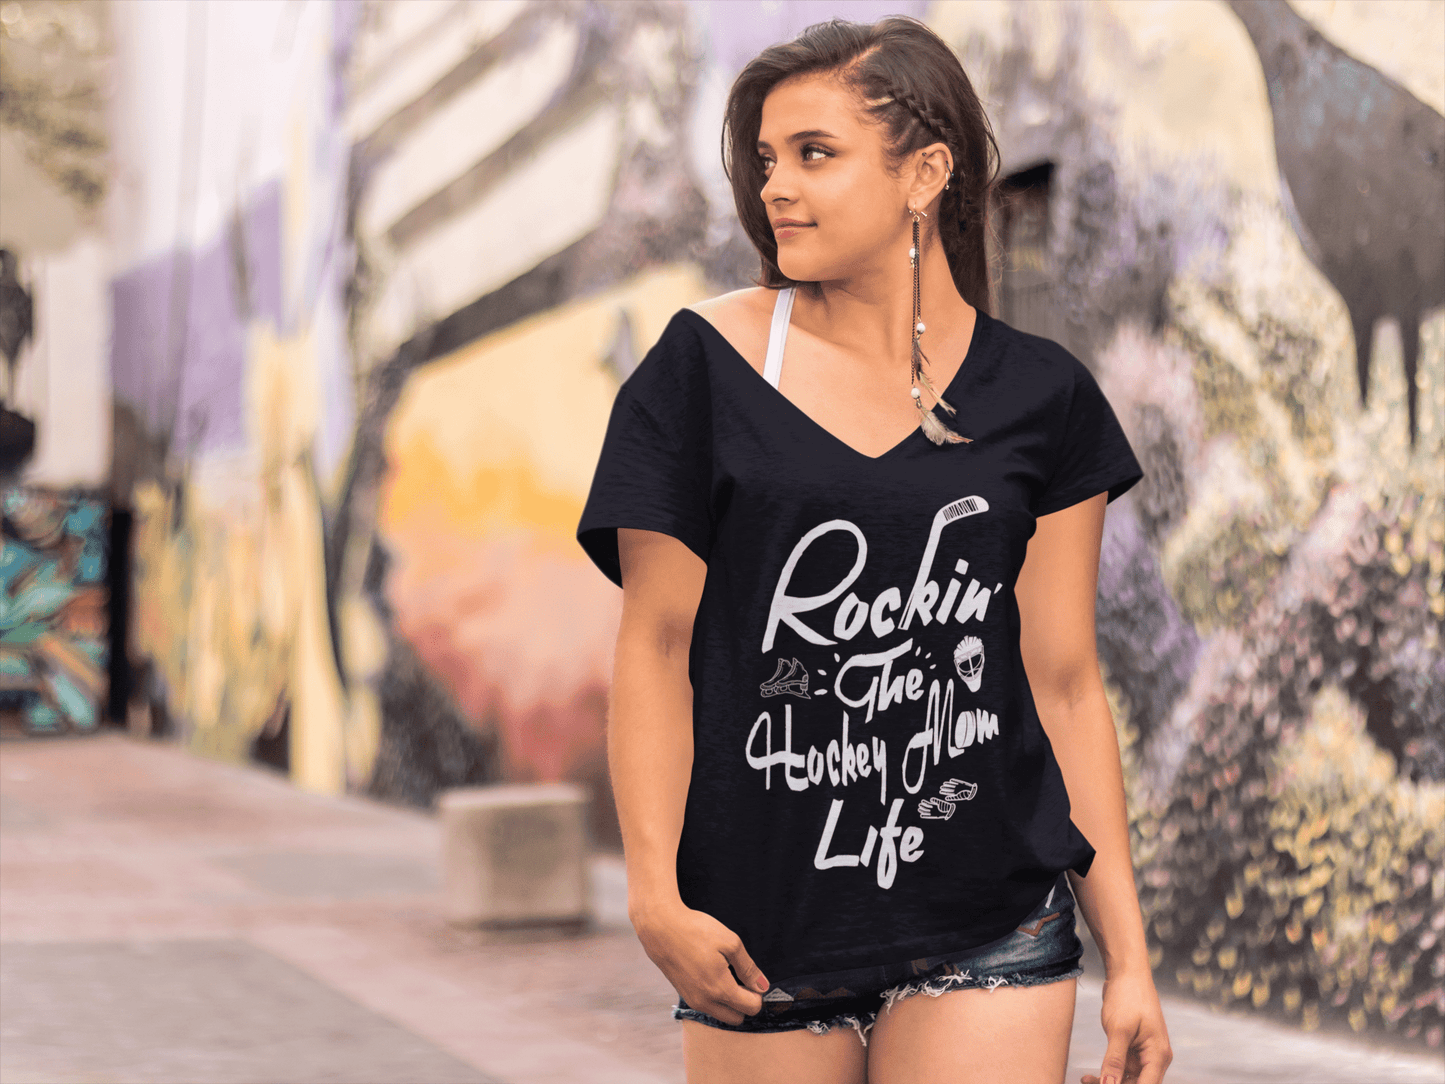 ULTRABASIC Damen T-Shirt Rockin the Hockey Mom Life – Lustiges Mutter-T-Shirt